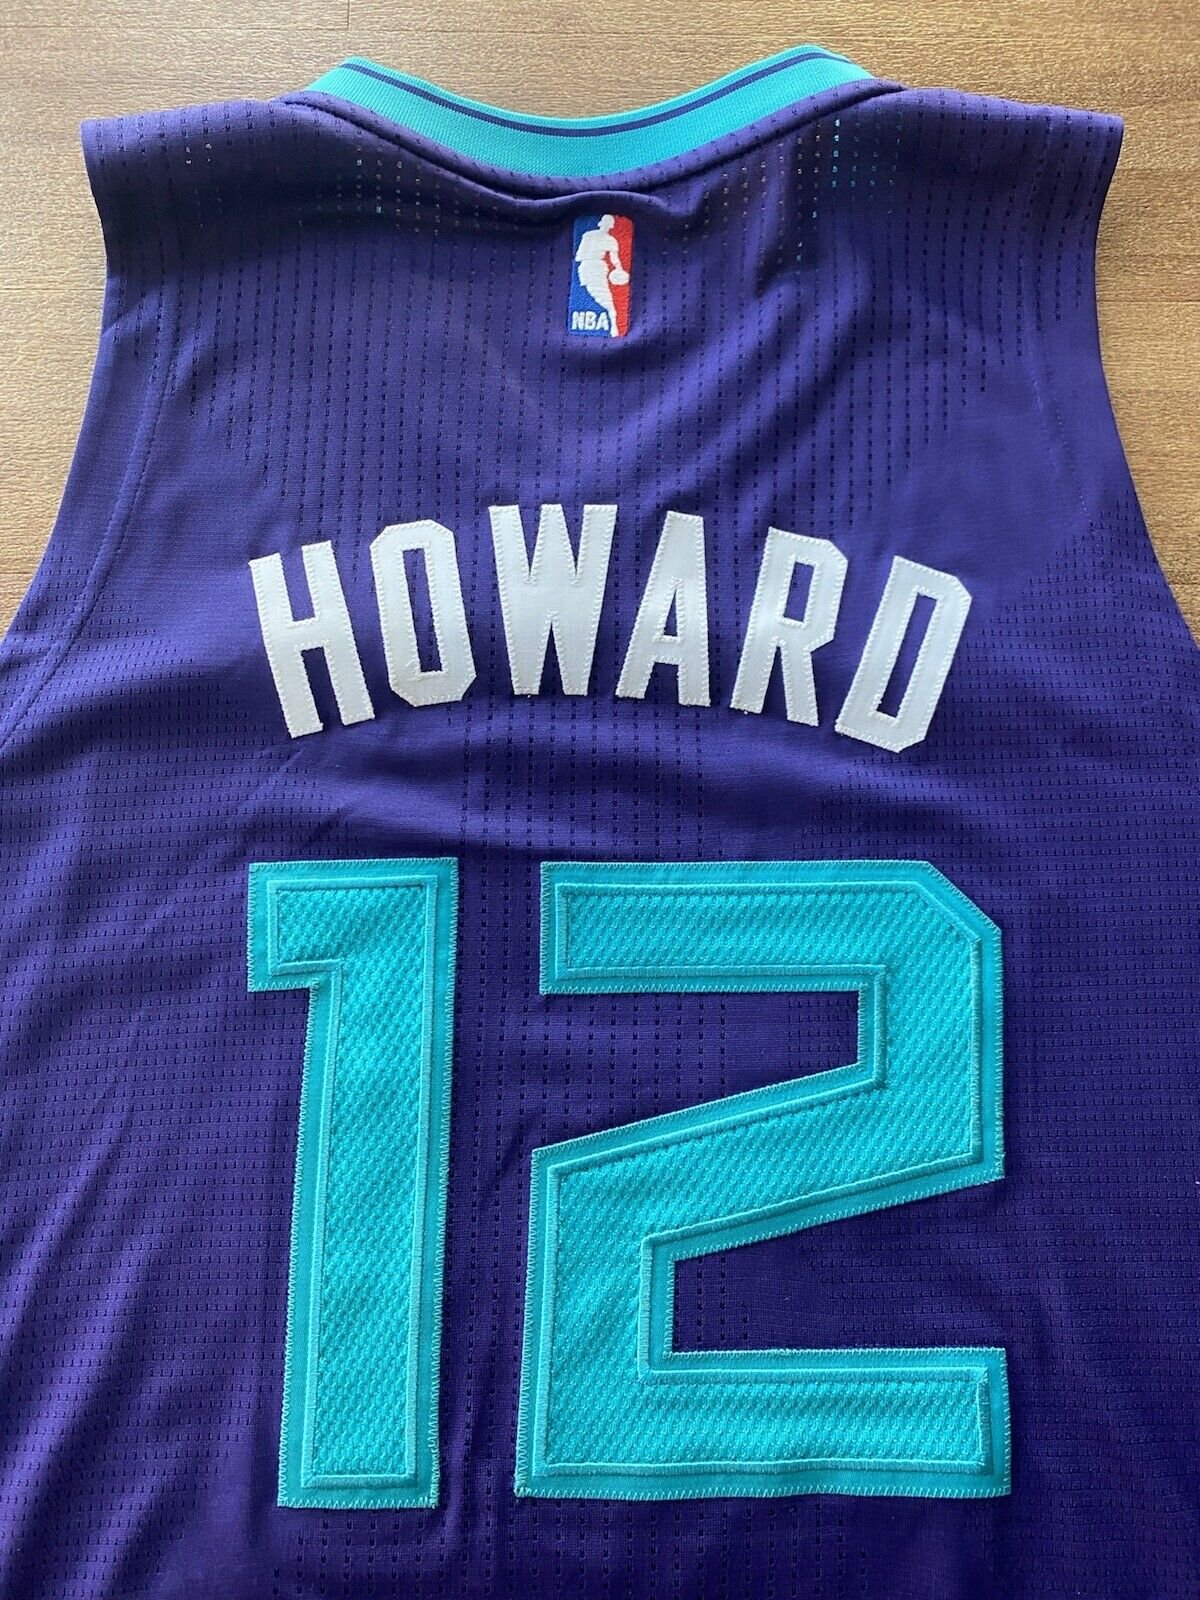 Nike NBA Los Angeles Lakers City Edition Dwight Howard Swingman Jersey